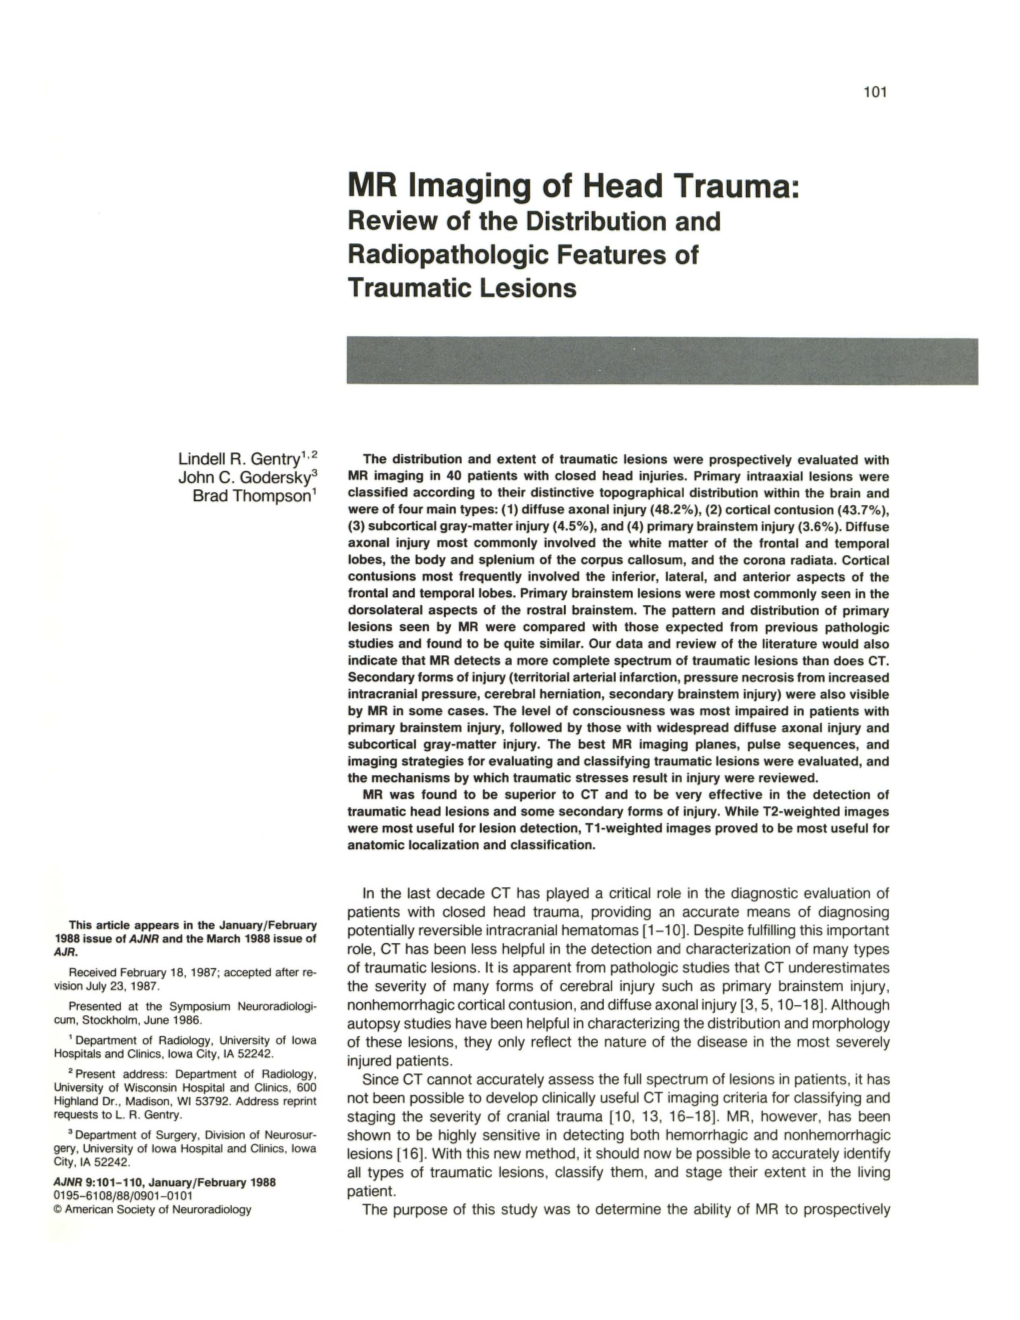 trauma imaging a literature review